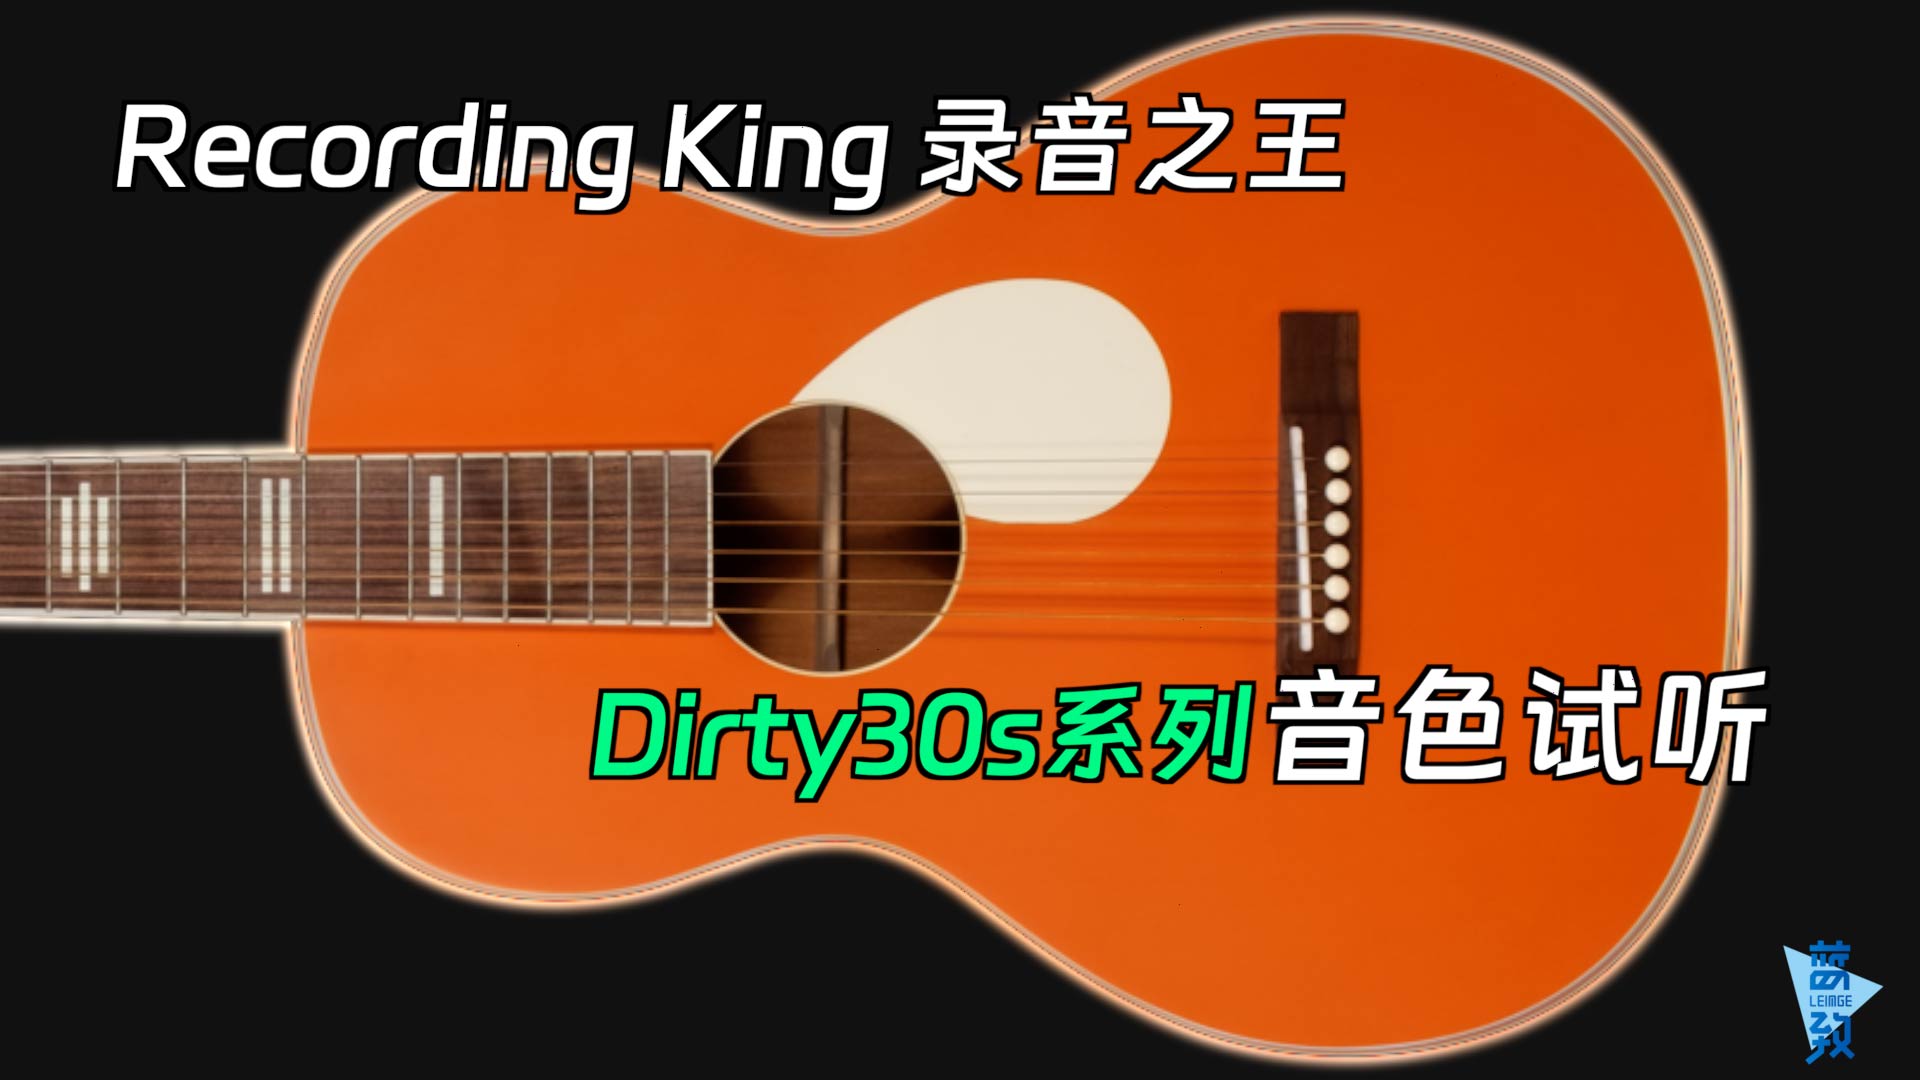 Recroding King dirty30s 音色试听